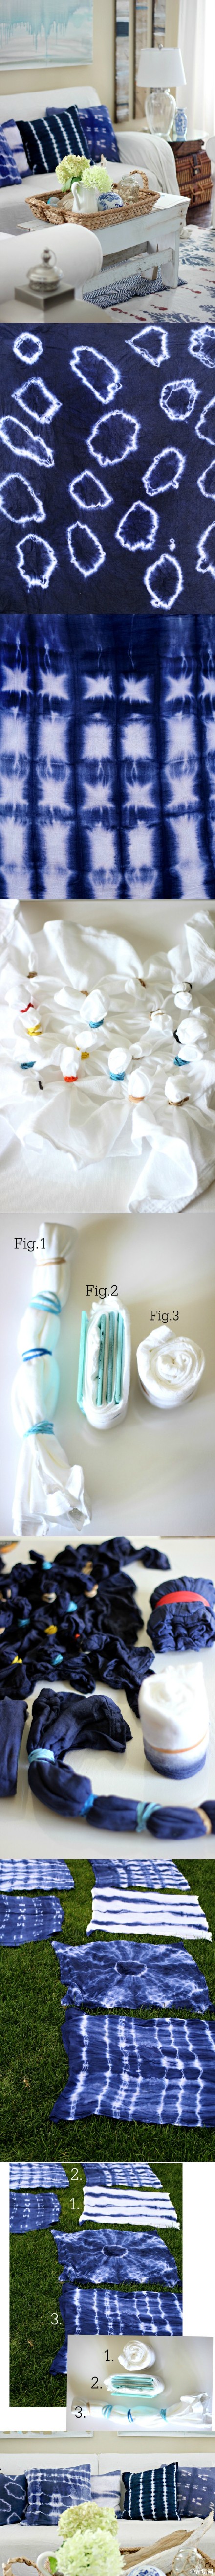 #How to Shibori Tie-Dye Fabric#By Lucy Akins。再来一发扎染。φ(≧ω≦*)♪周末愉快！